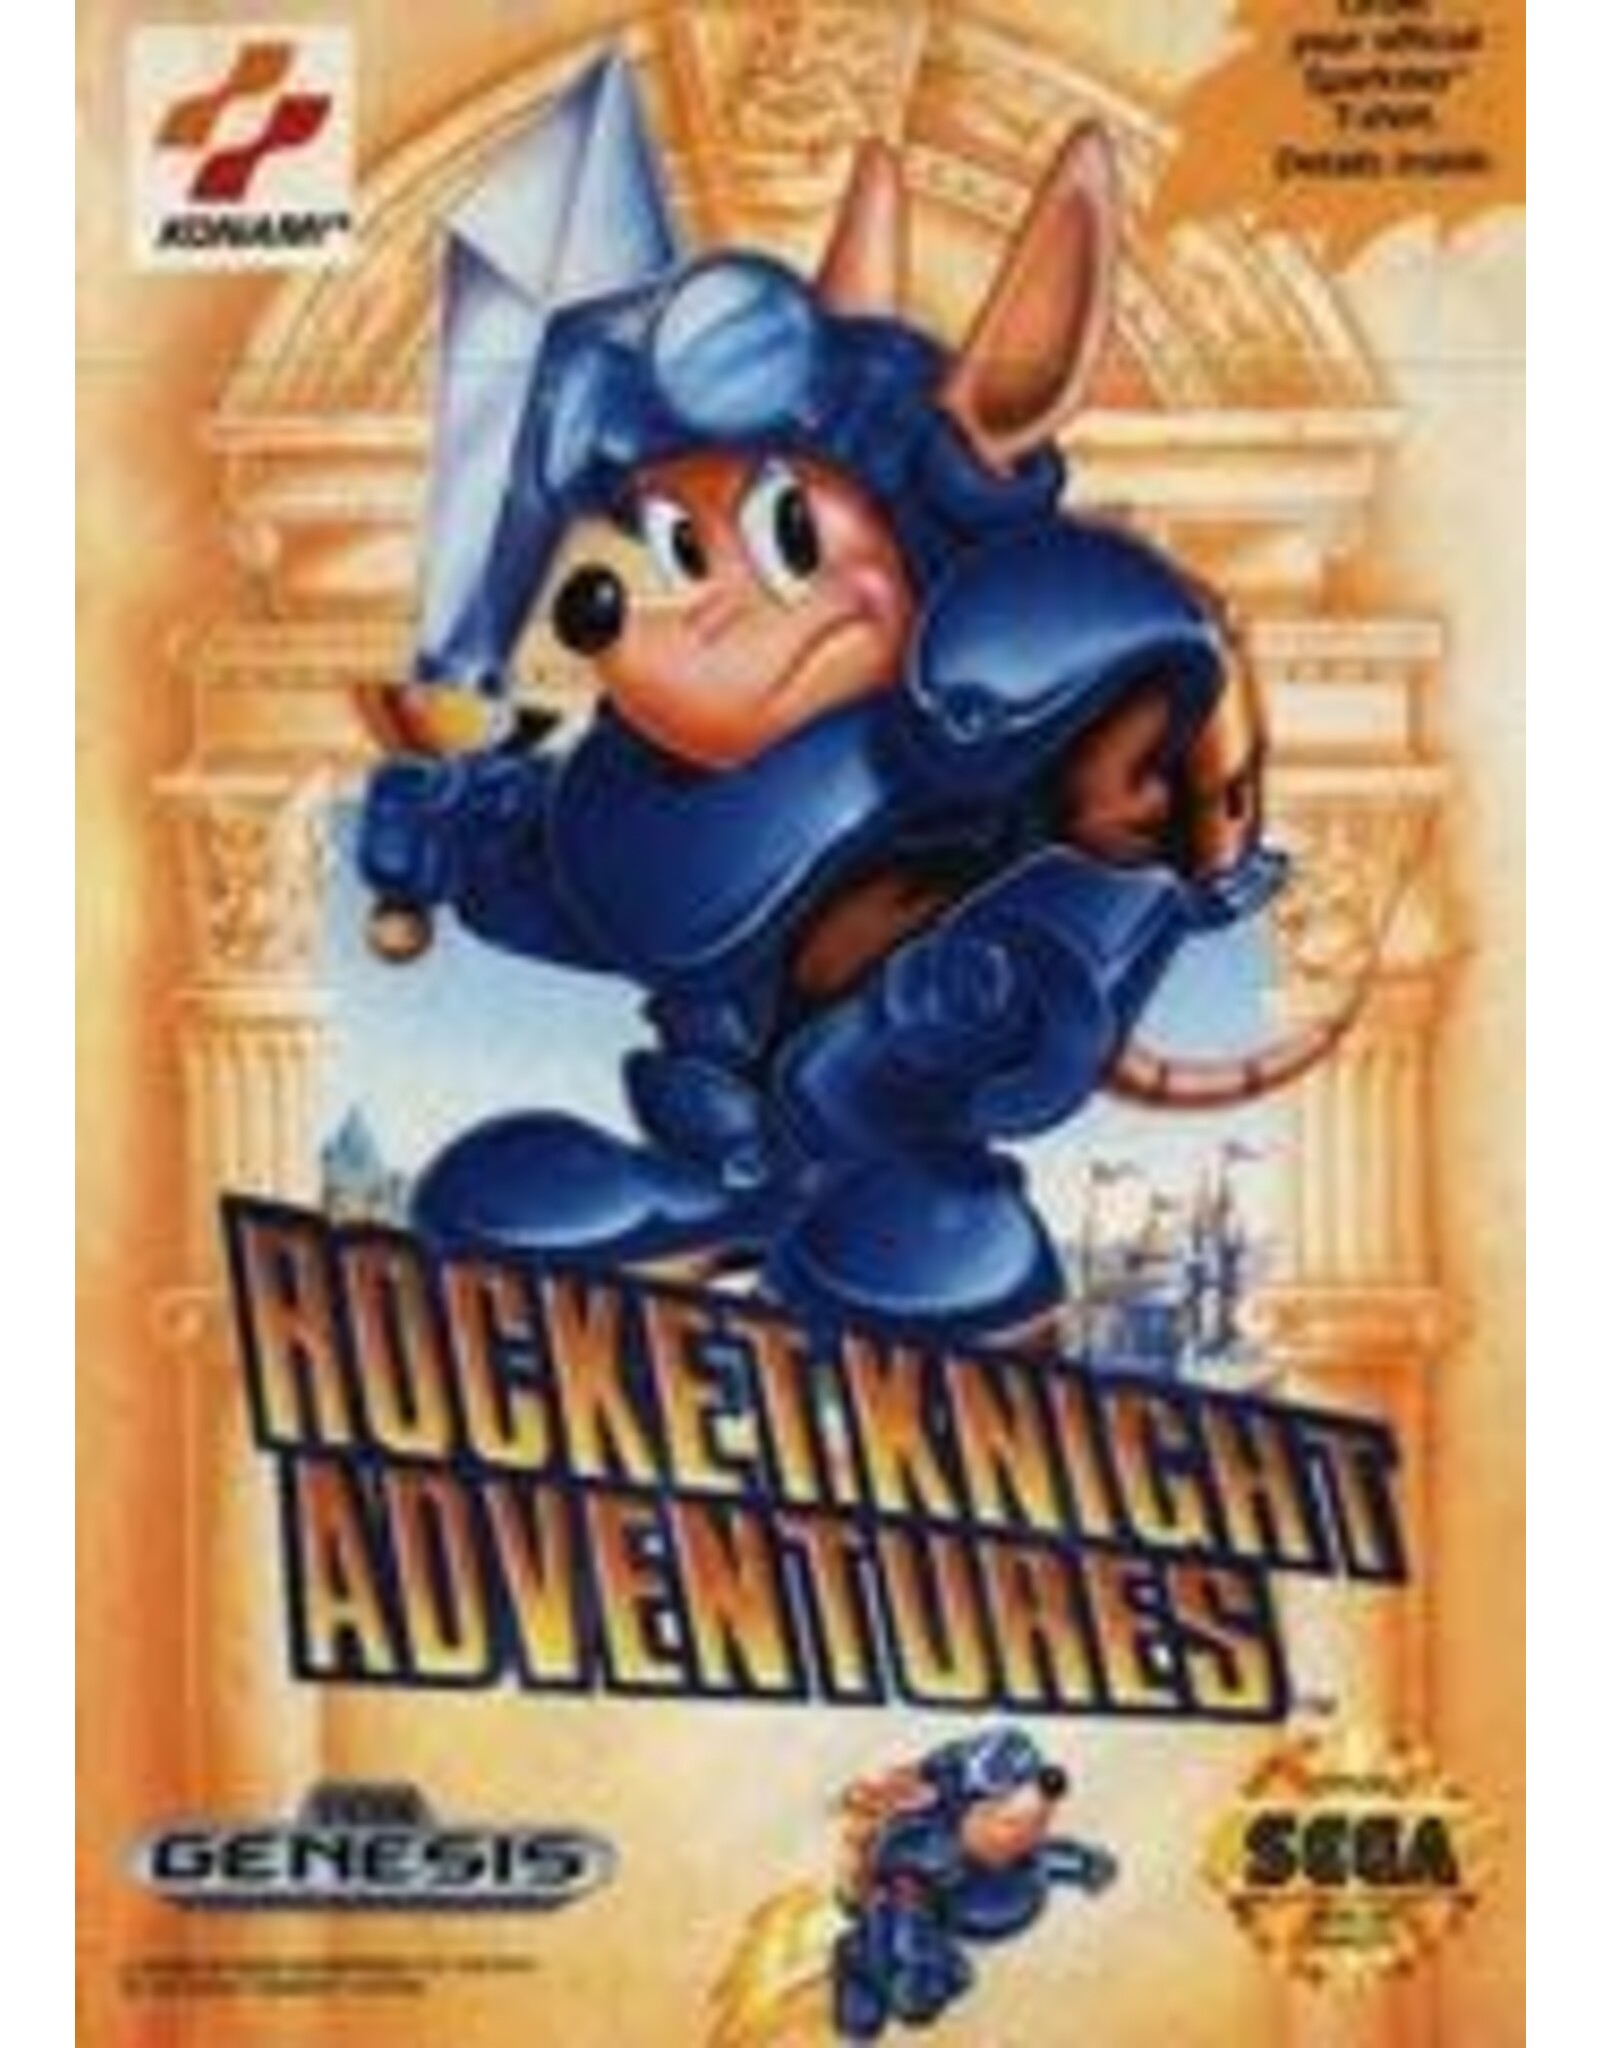 Sega Genesis Rocket Knight Adventures (CiB; Severely Damaged Manual, Cart, and Label)